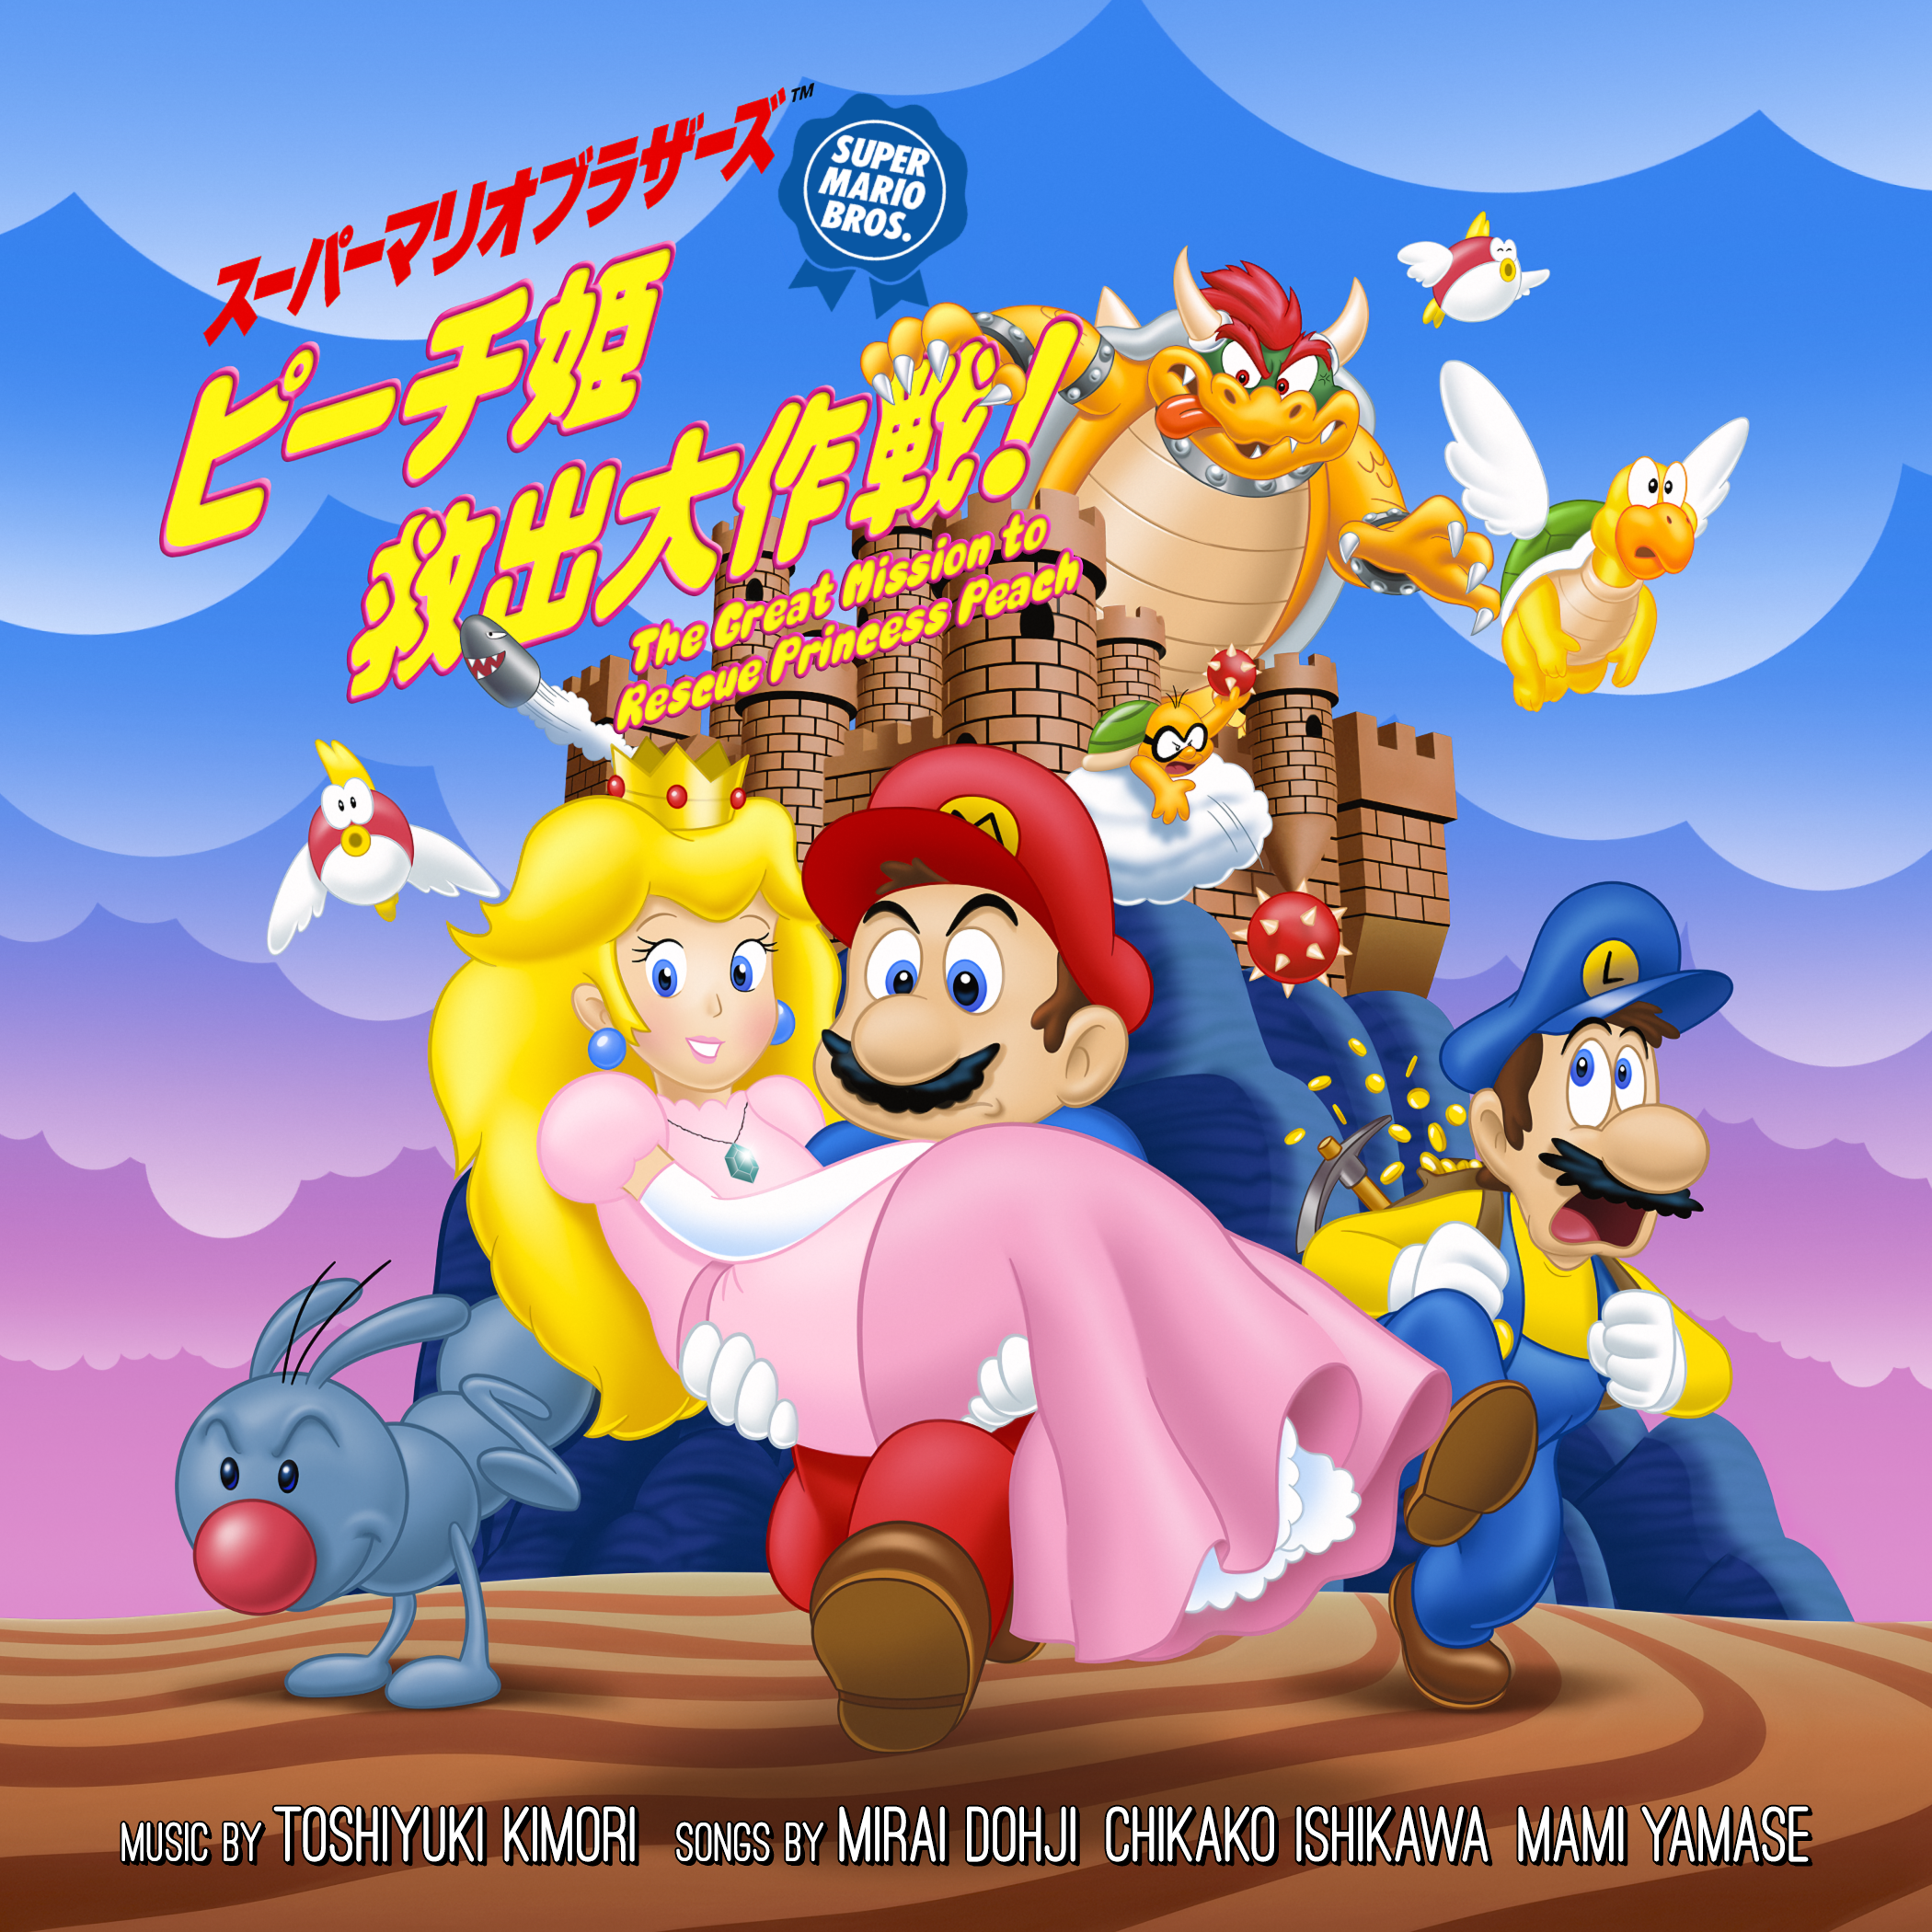 Live Action Super Mario Bros  1986 Mario Anime film  Shigeru Miyamoto   Know Your Meme